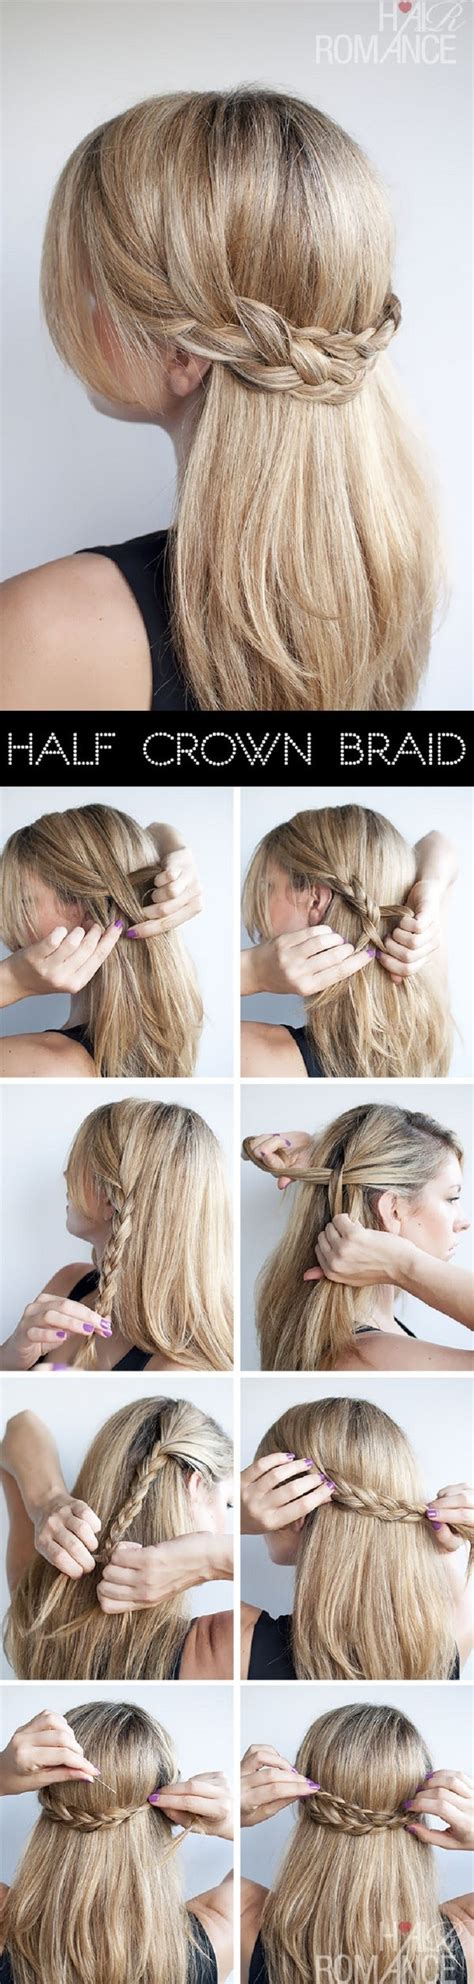 cute  easy braided hairstyle tutorials